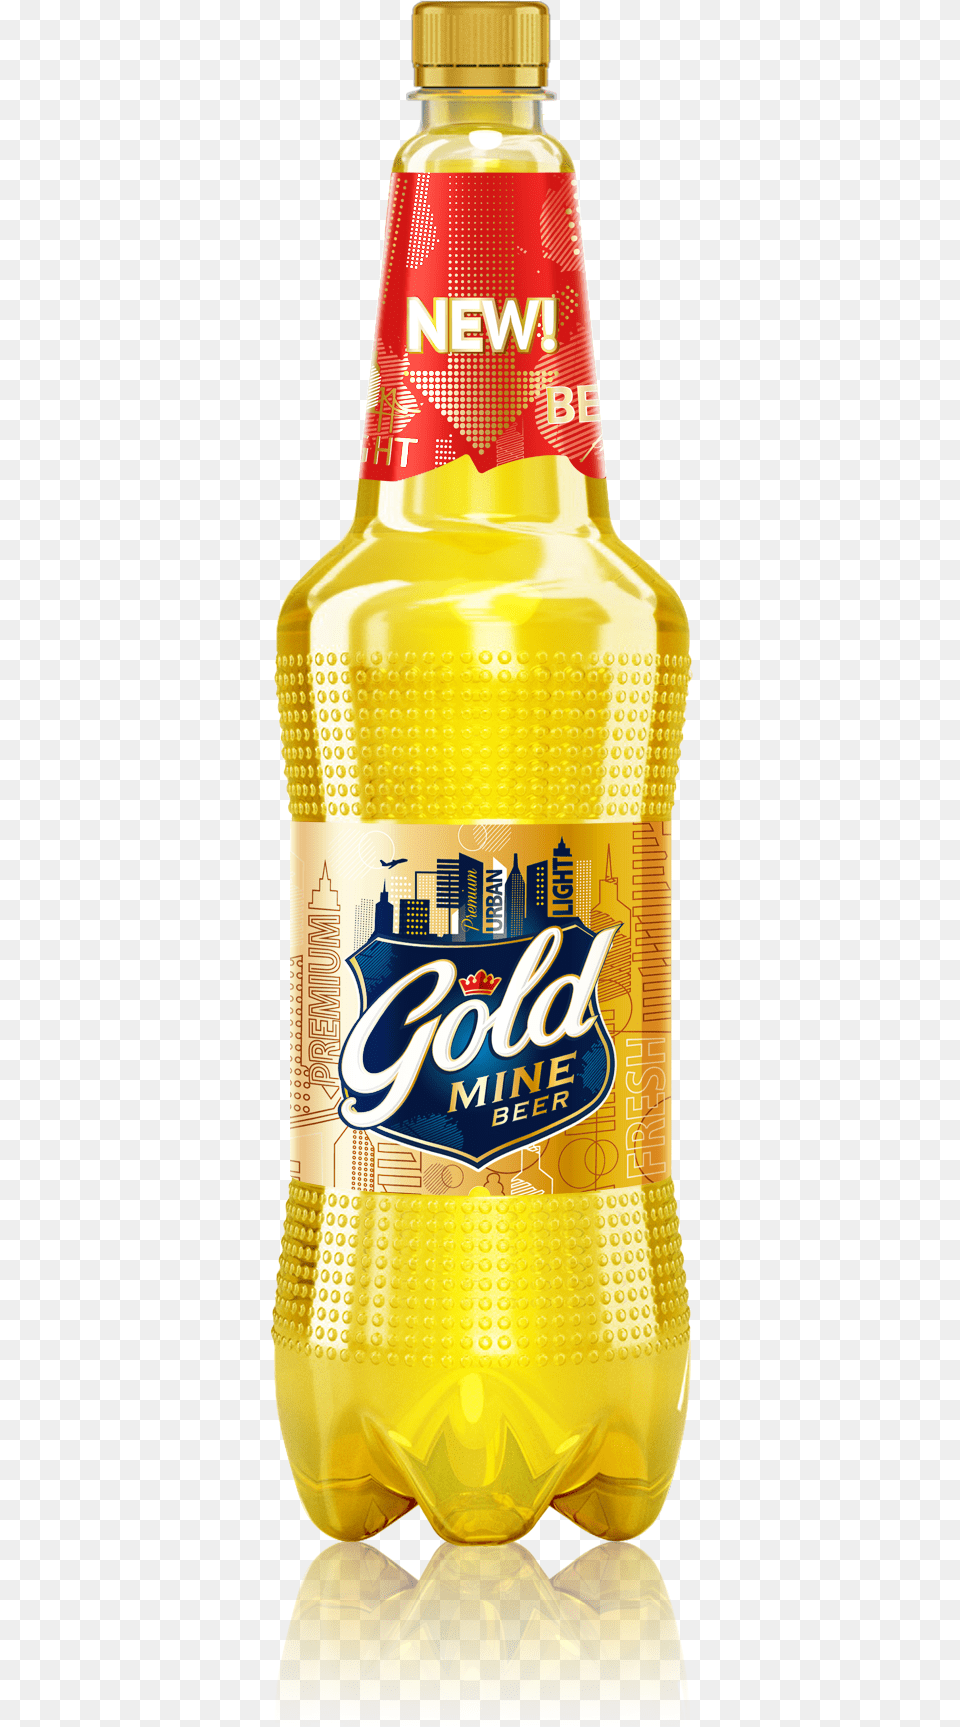 Gold Mine Beer Efes Rus New Bottle By Pet Engineering Gold Mine Beer Pet, Food, Ketchup Png Image